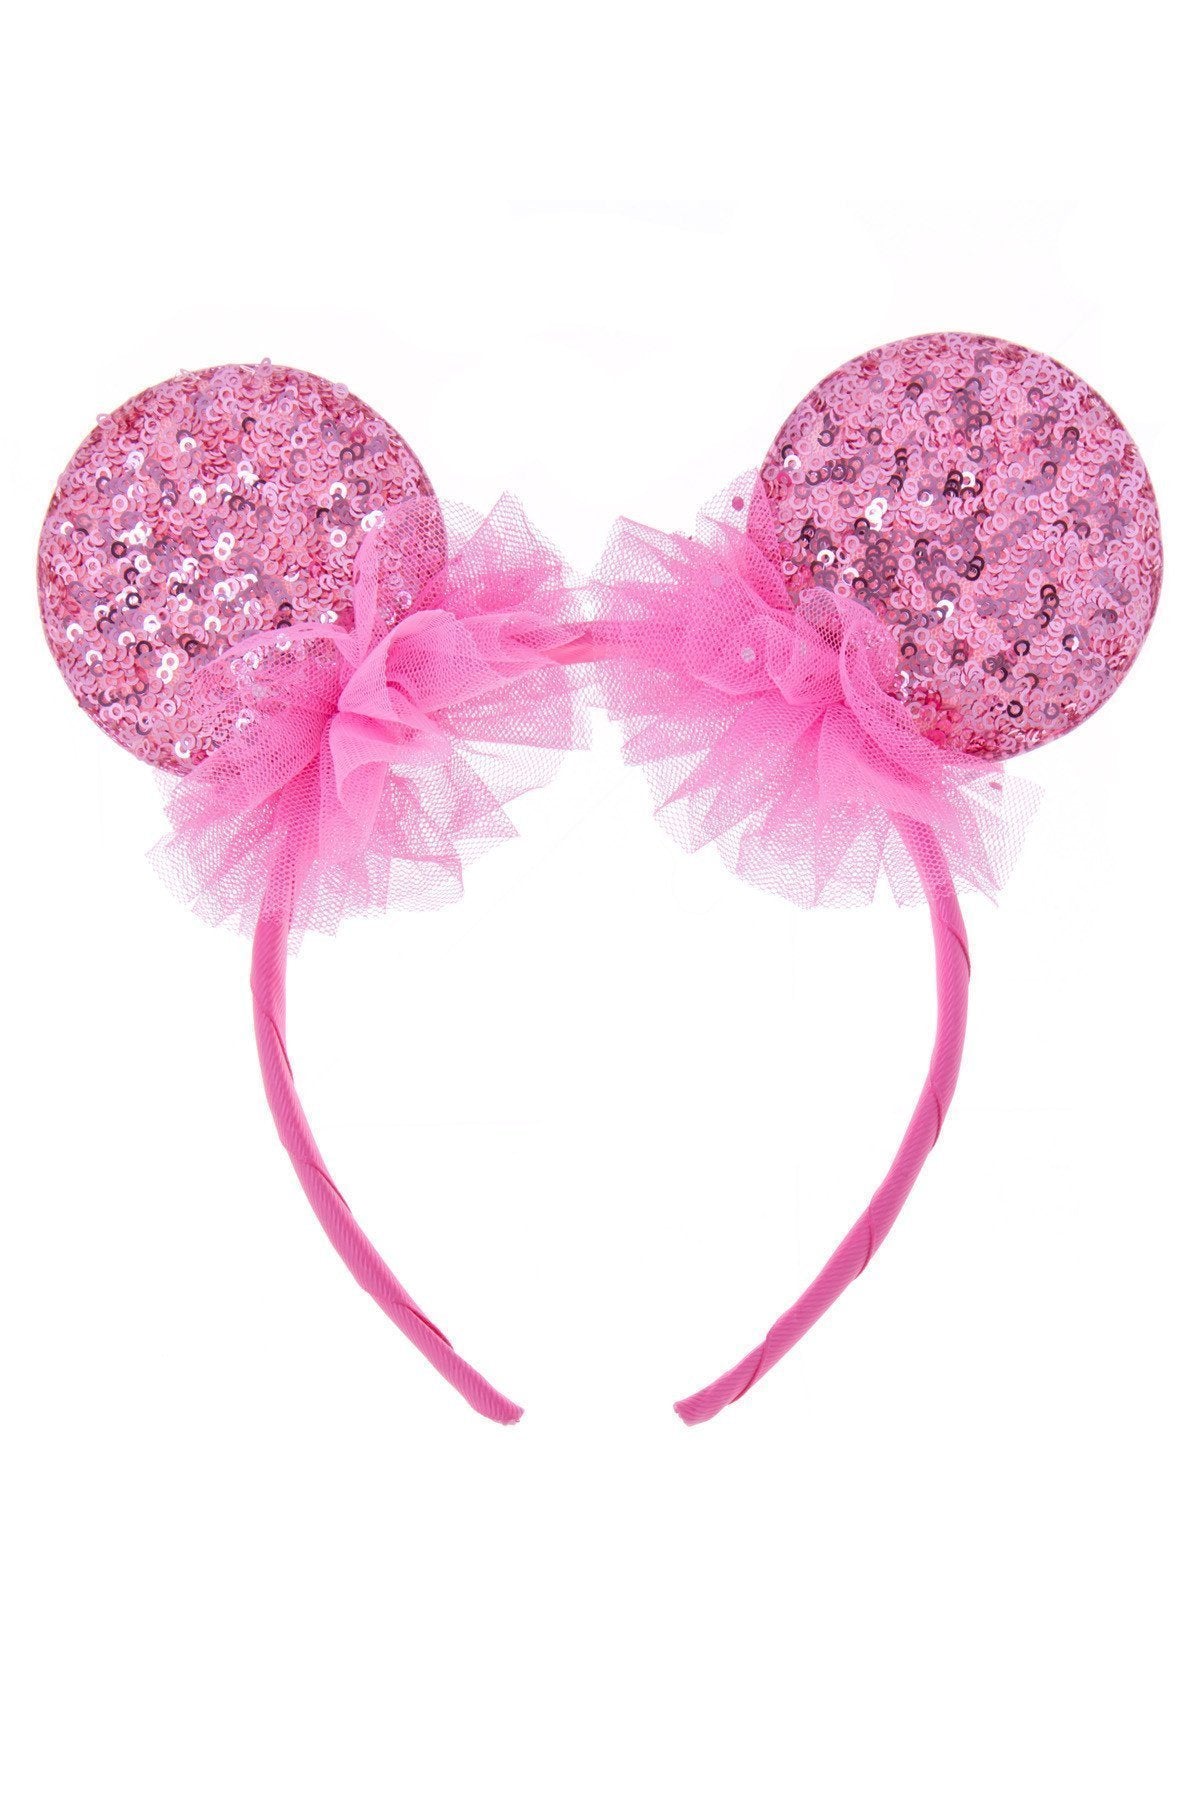 spangle round mouse ear headband cherry pink